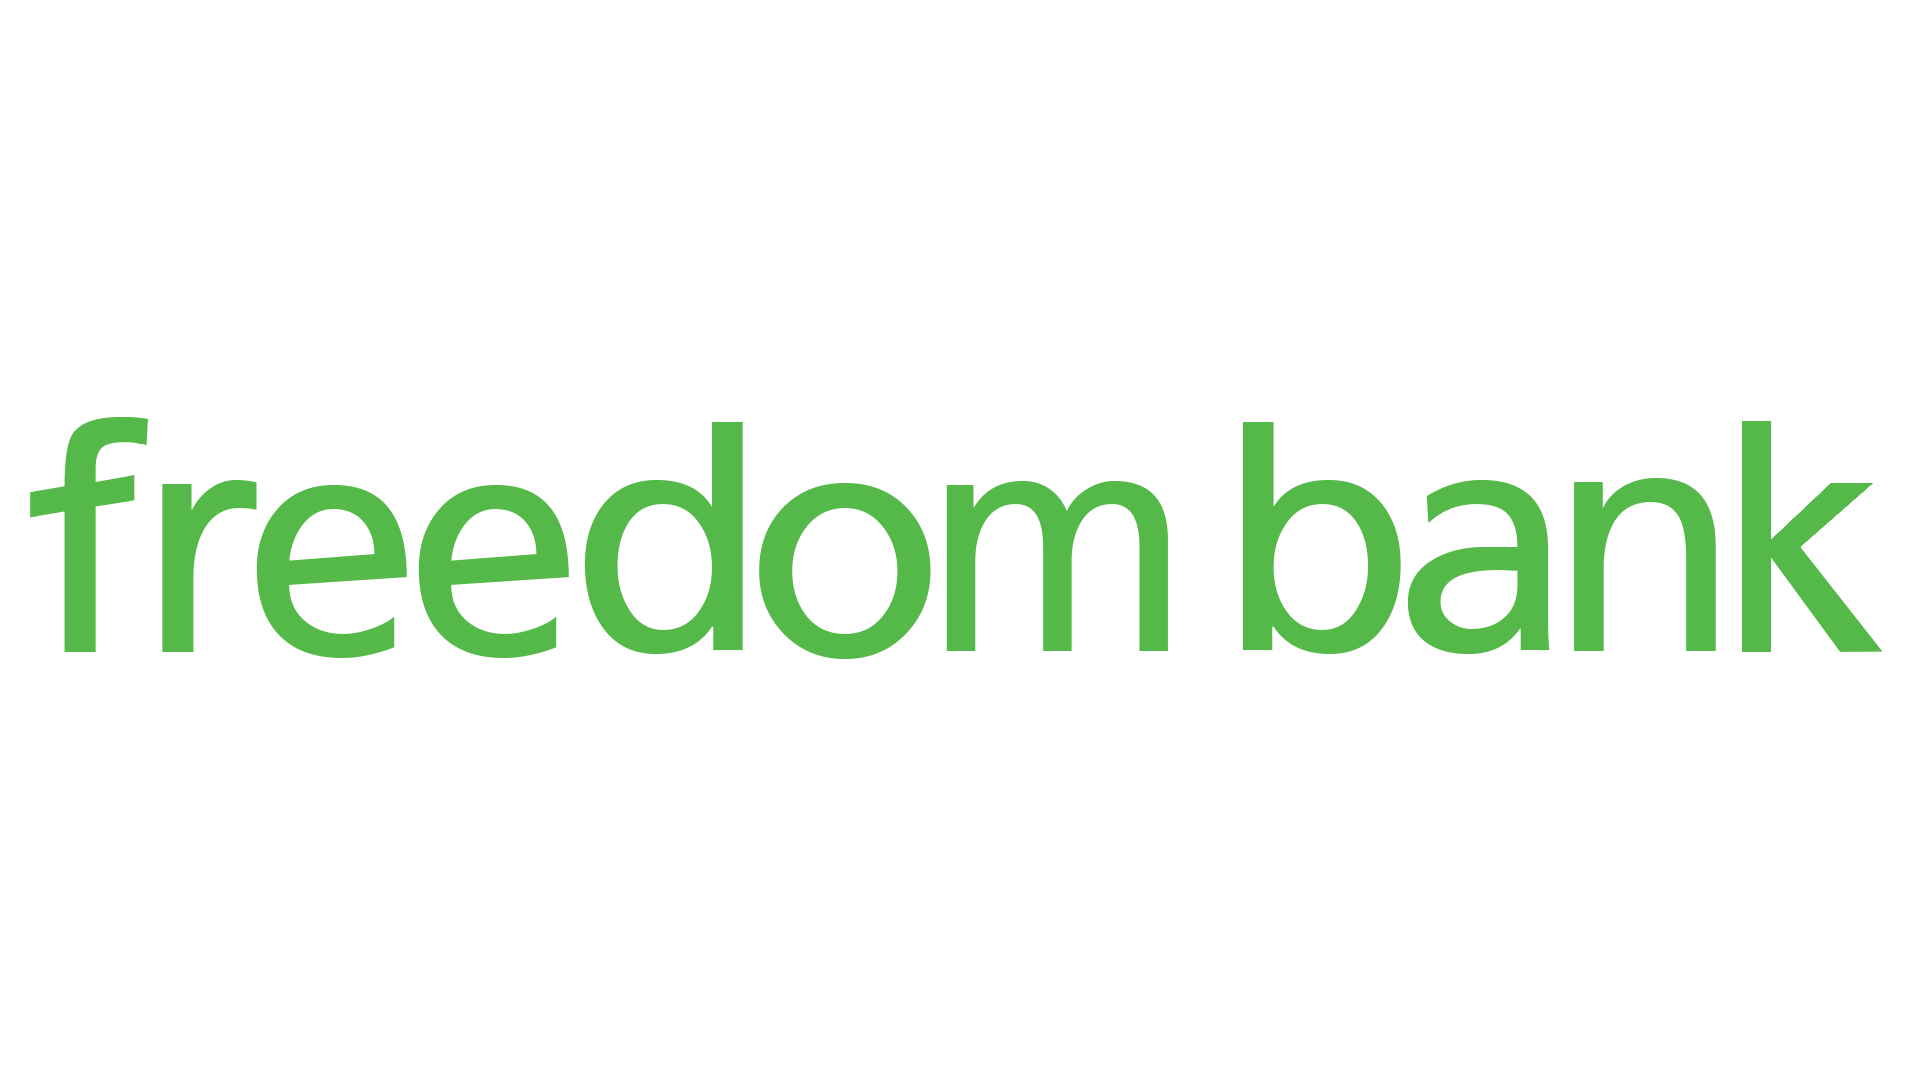 Company Logo For Freedom Bank'